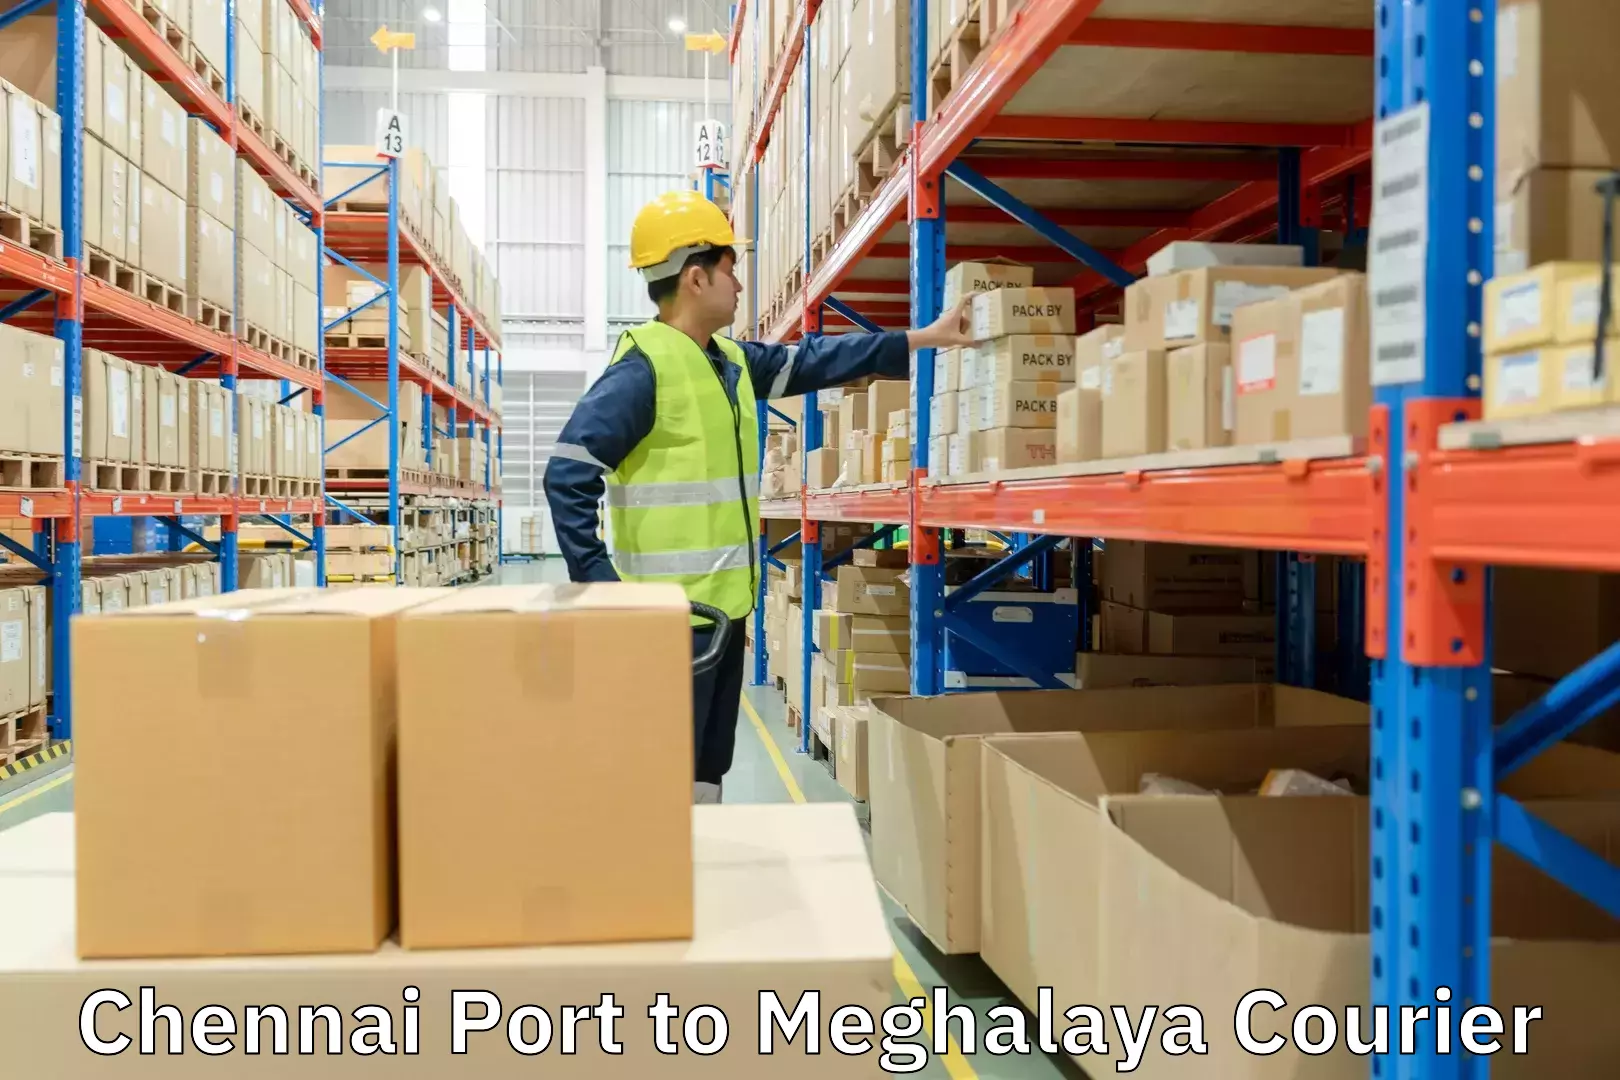 Express logistics providers Chennai Port to Meghalaya